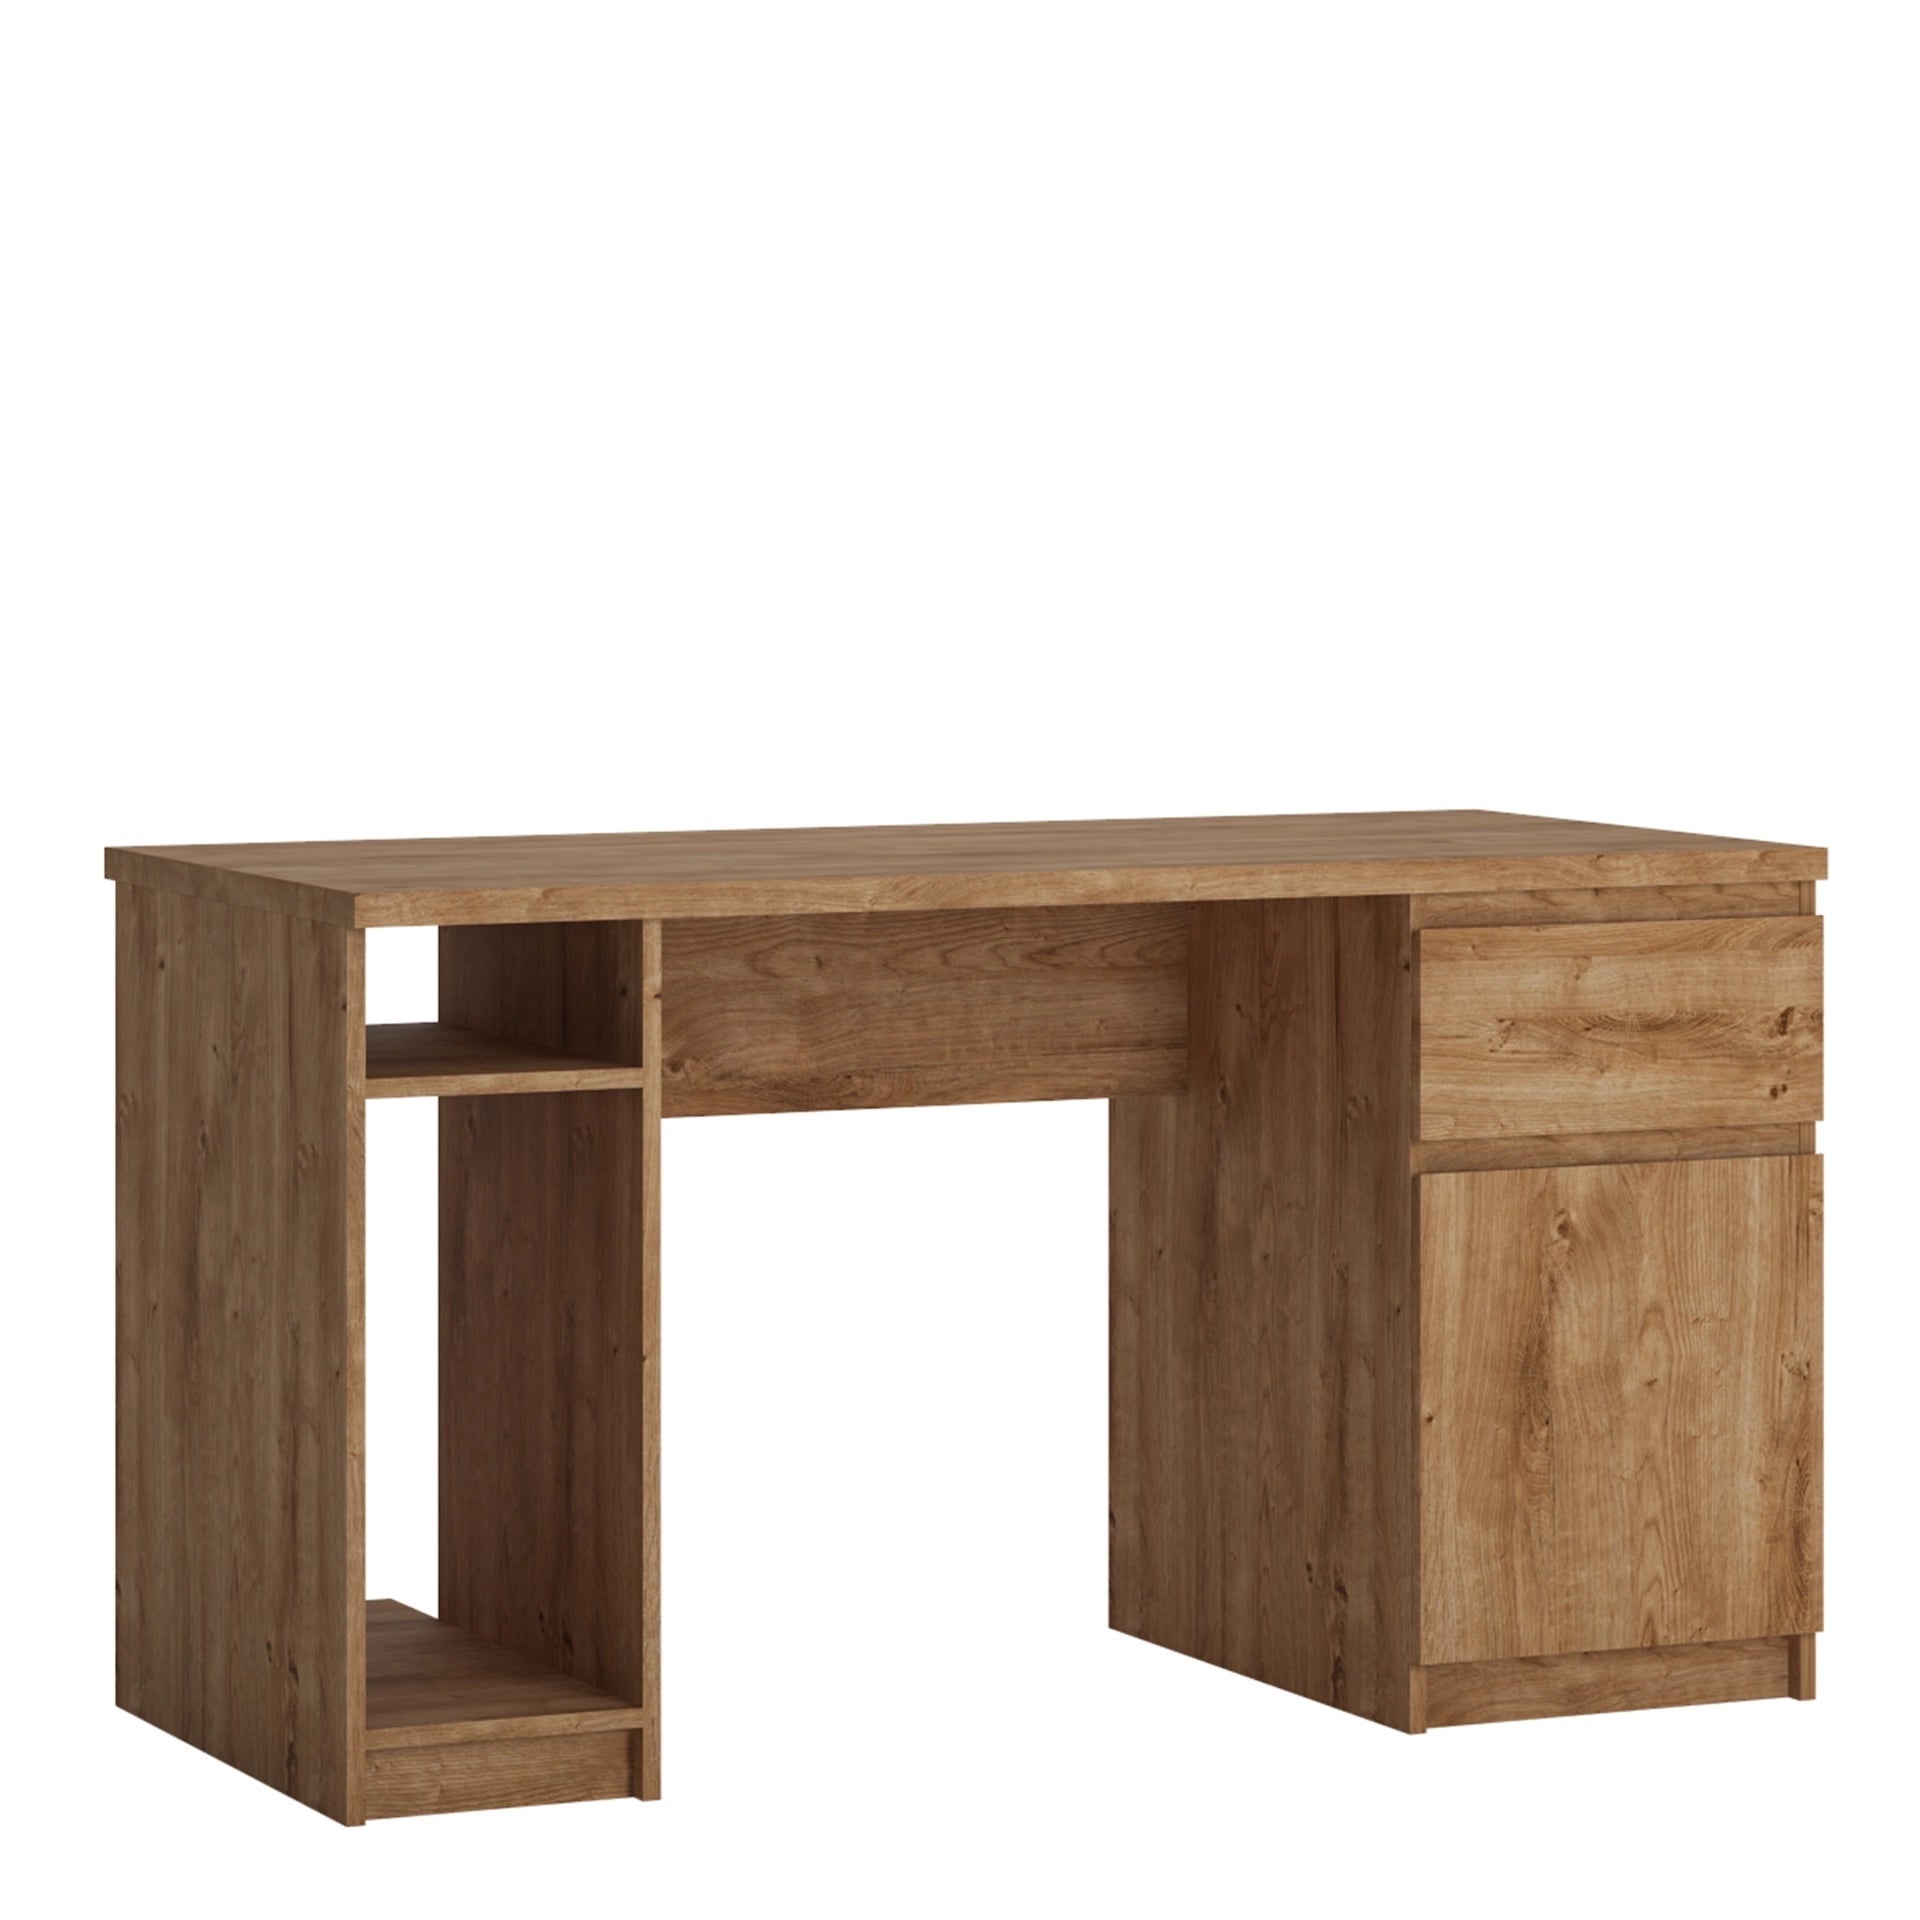 Furniture To Go Fribo 1 Door 1 Drawer Twin Pedestal Desk in Oak